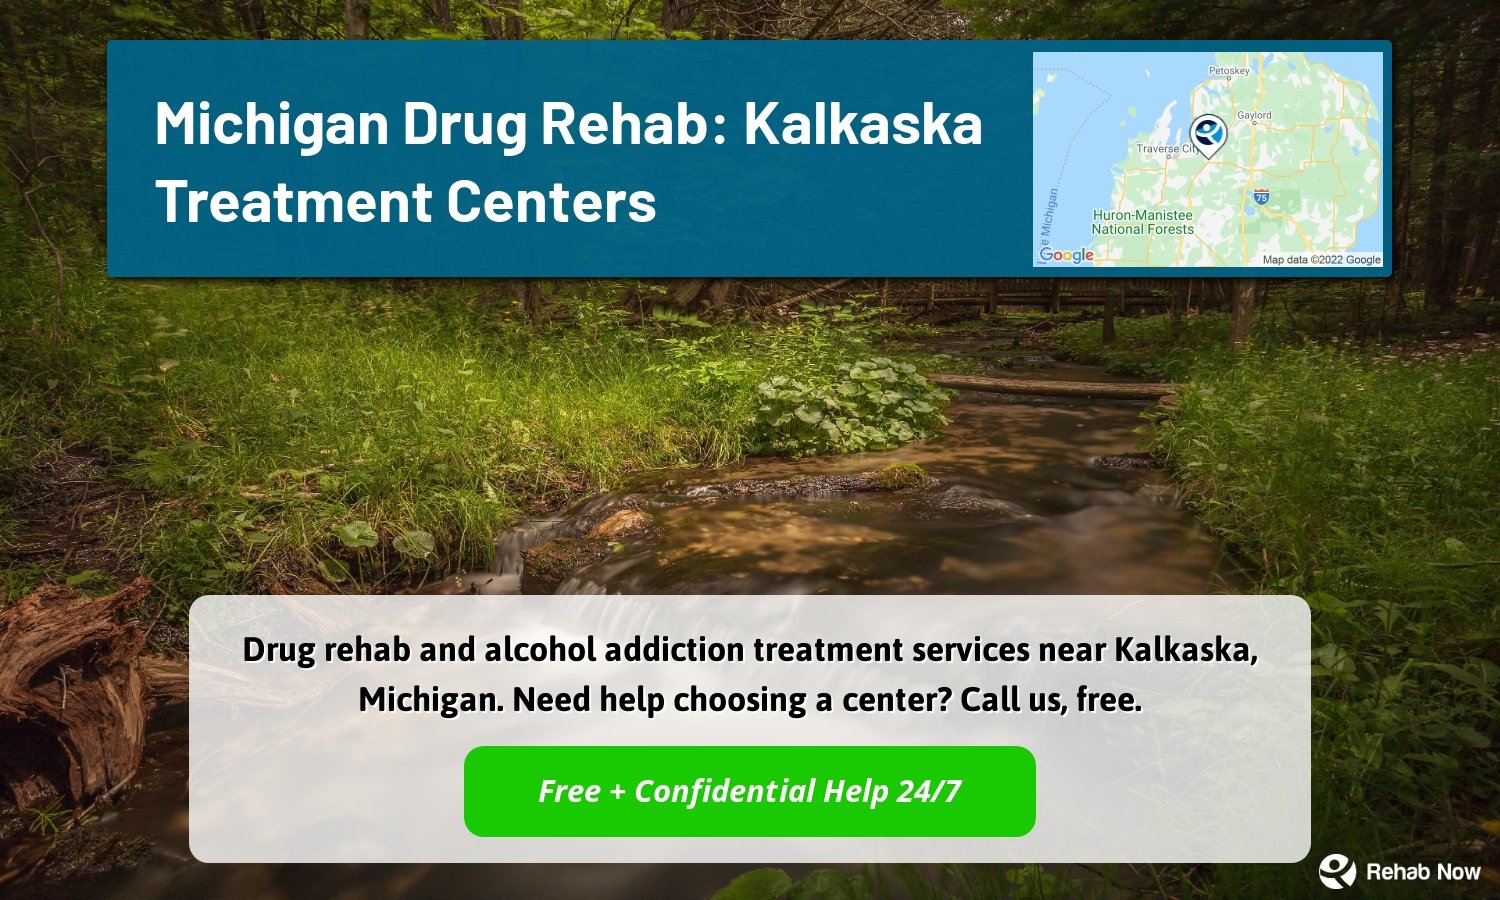 Drug rehab and alcohol addiction treatment services near Kalkaska, Michigan. Need help choosing a center? Call us, free.